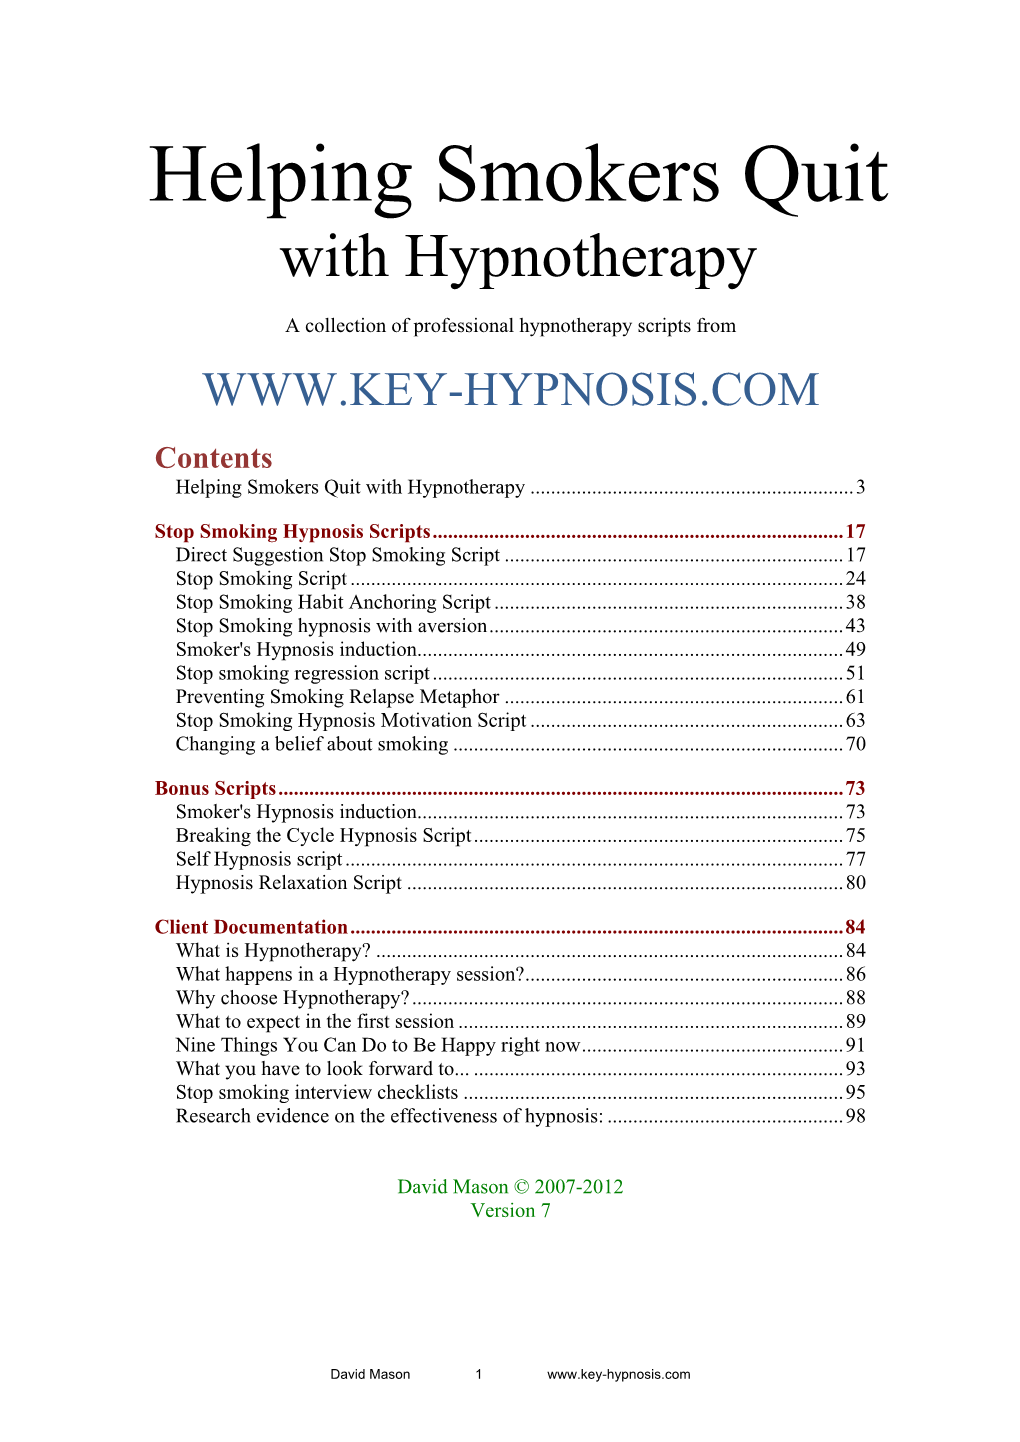 Hypnosis Scripts